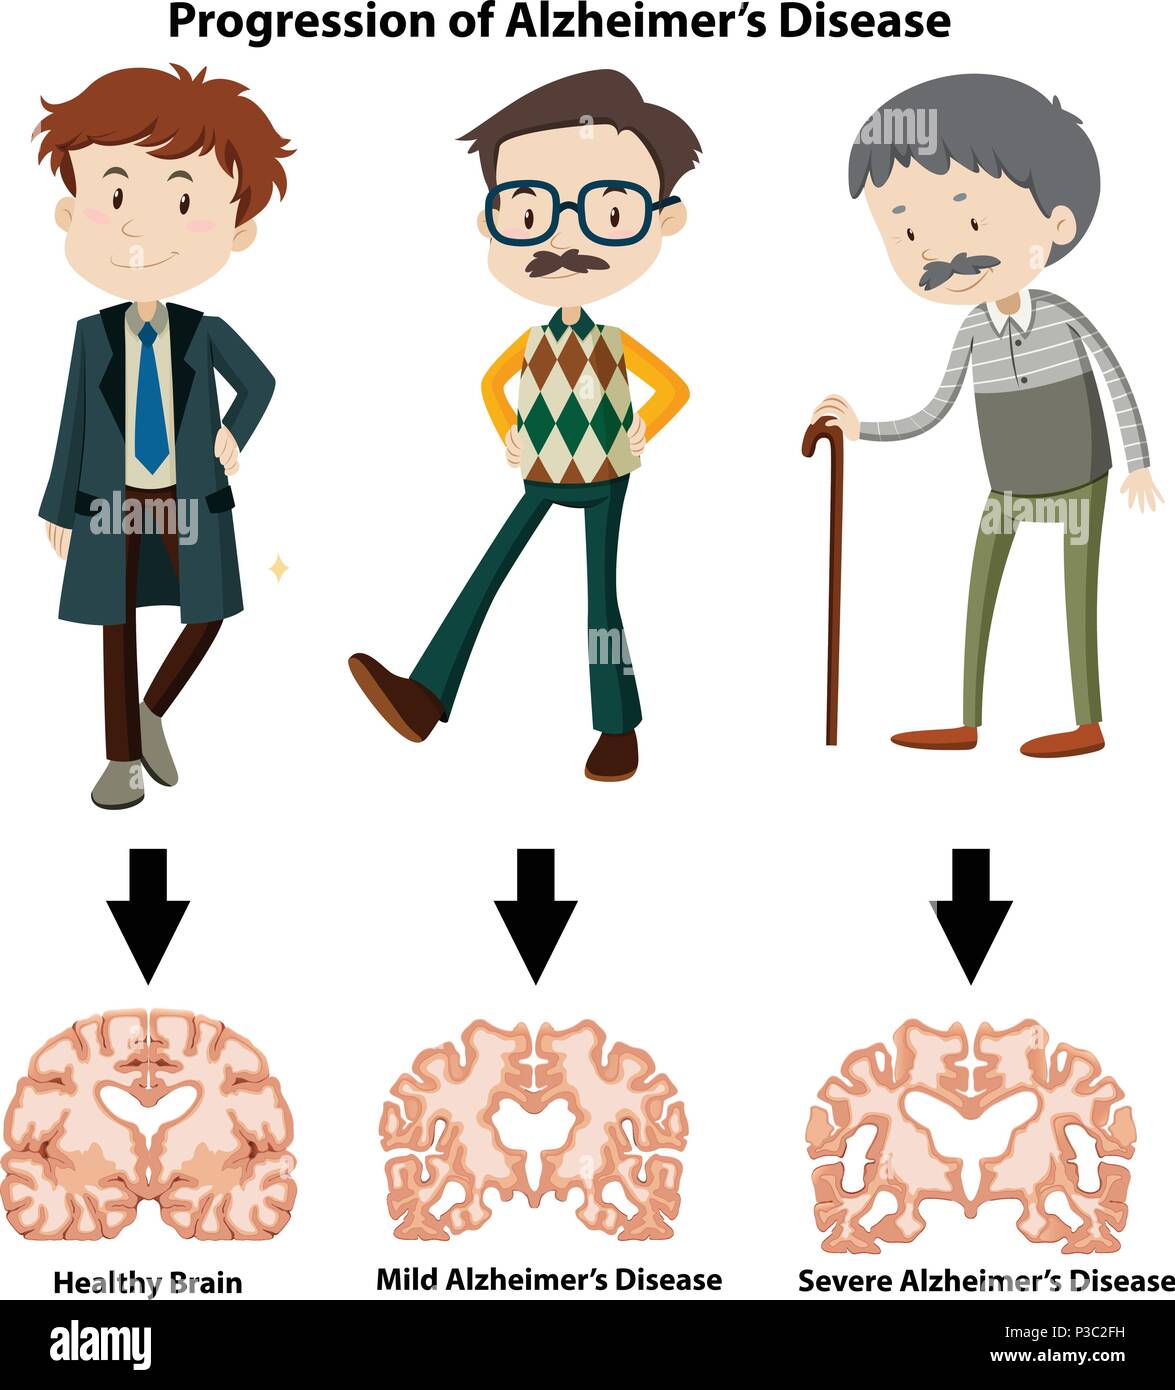 A Progression of Alzheimer